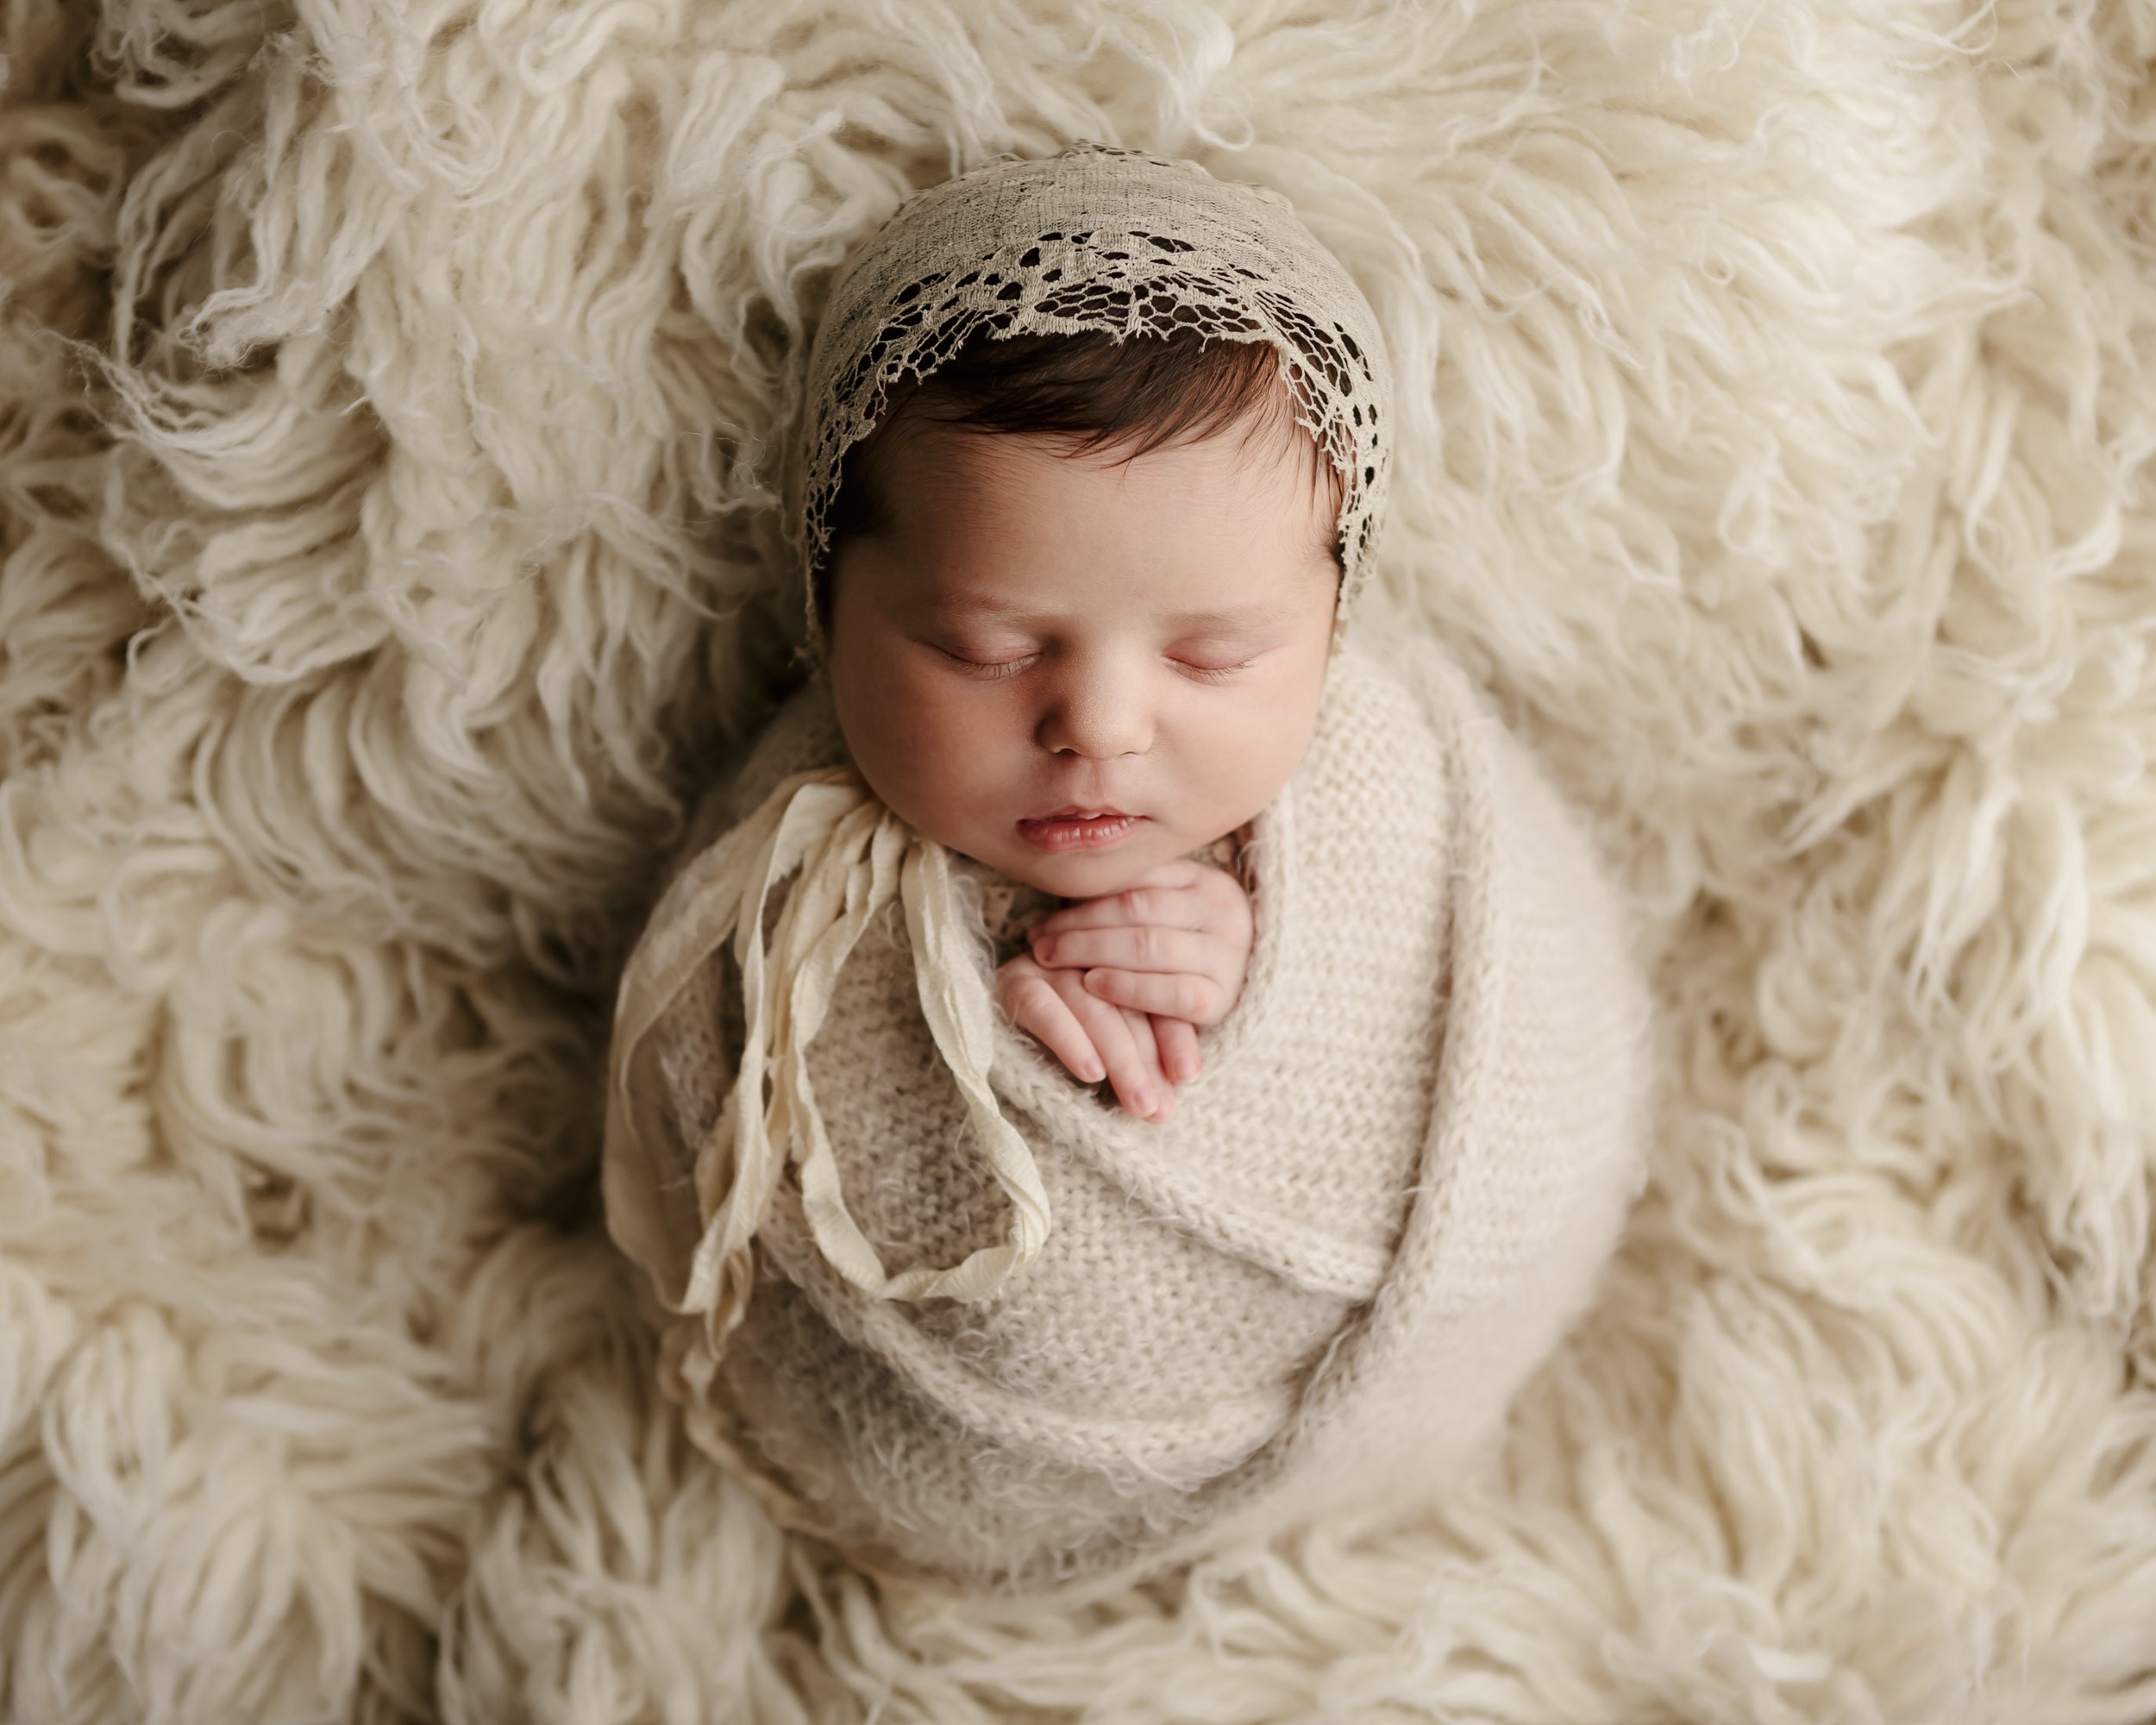 photographed by milton keynes newborn photographer